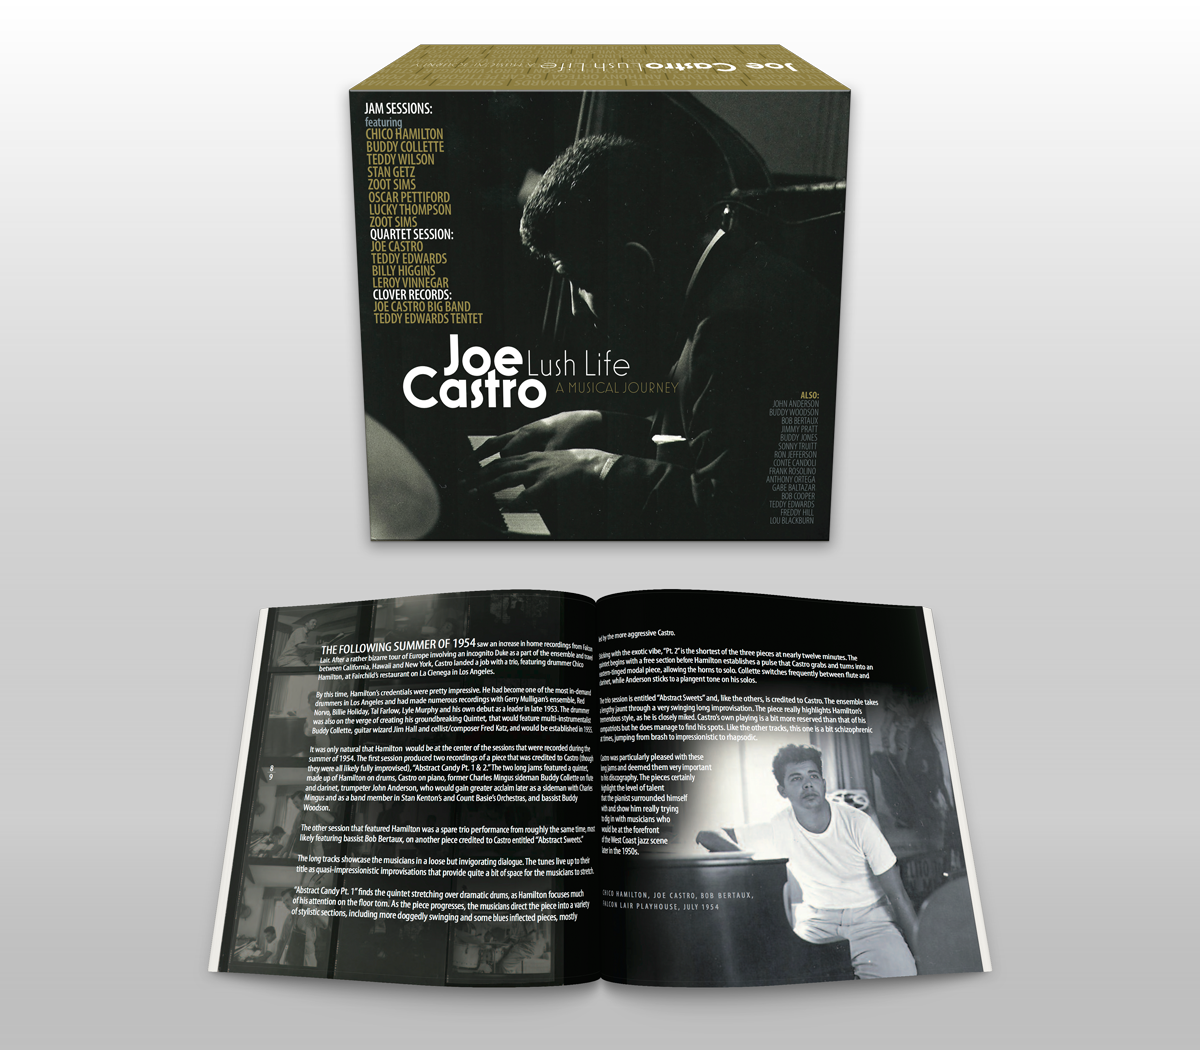 Joe Castro CD Box Set and Booklet